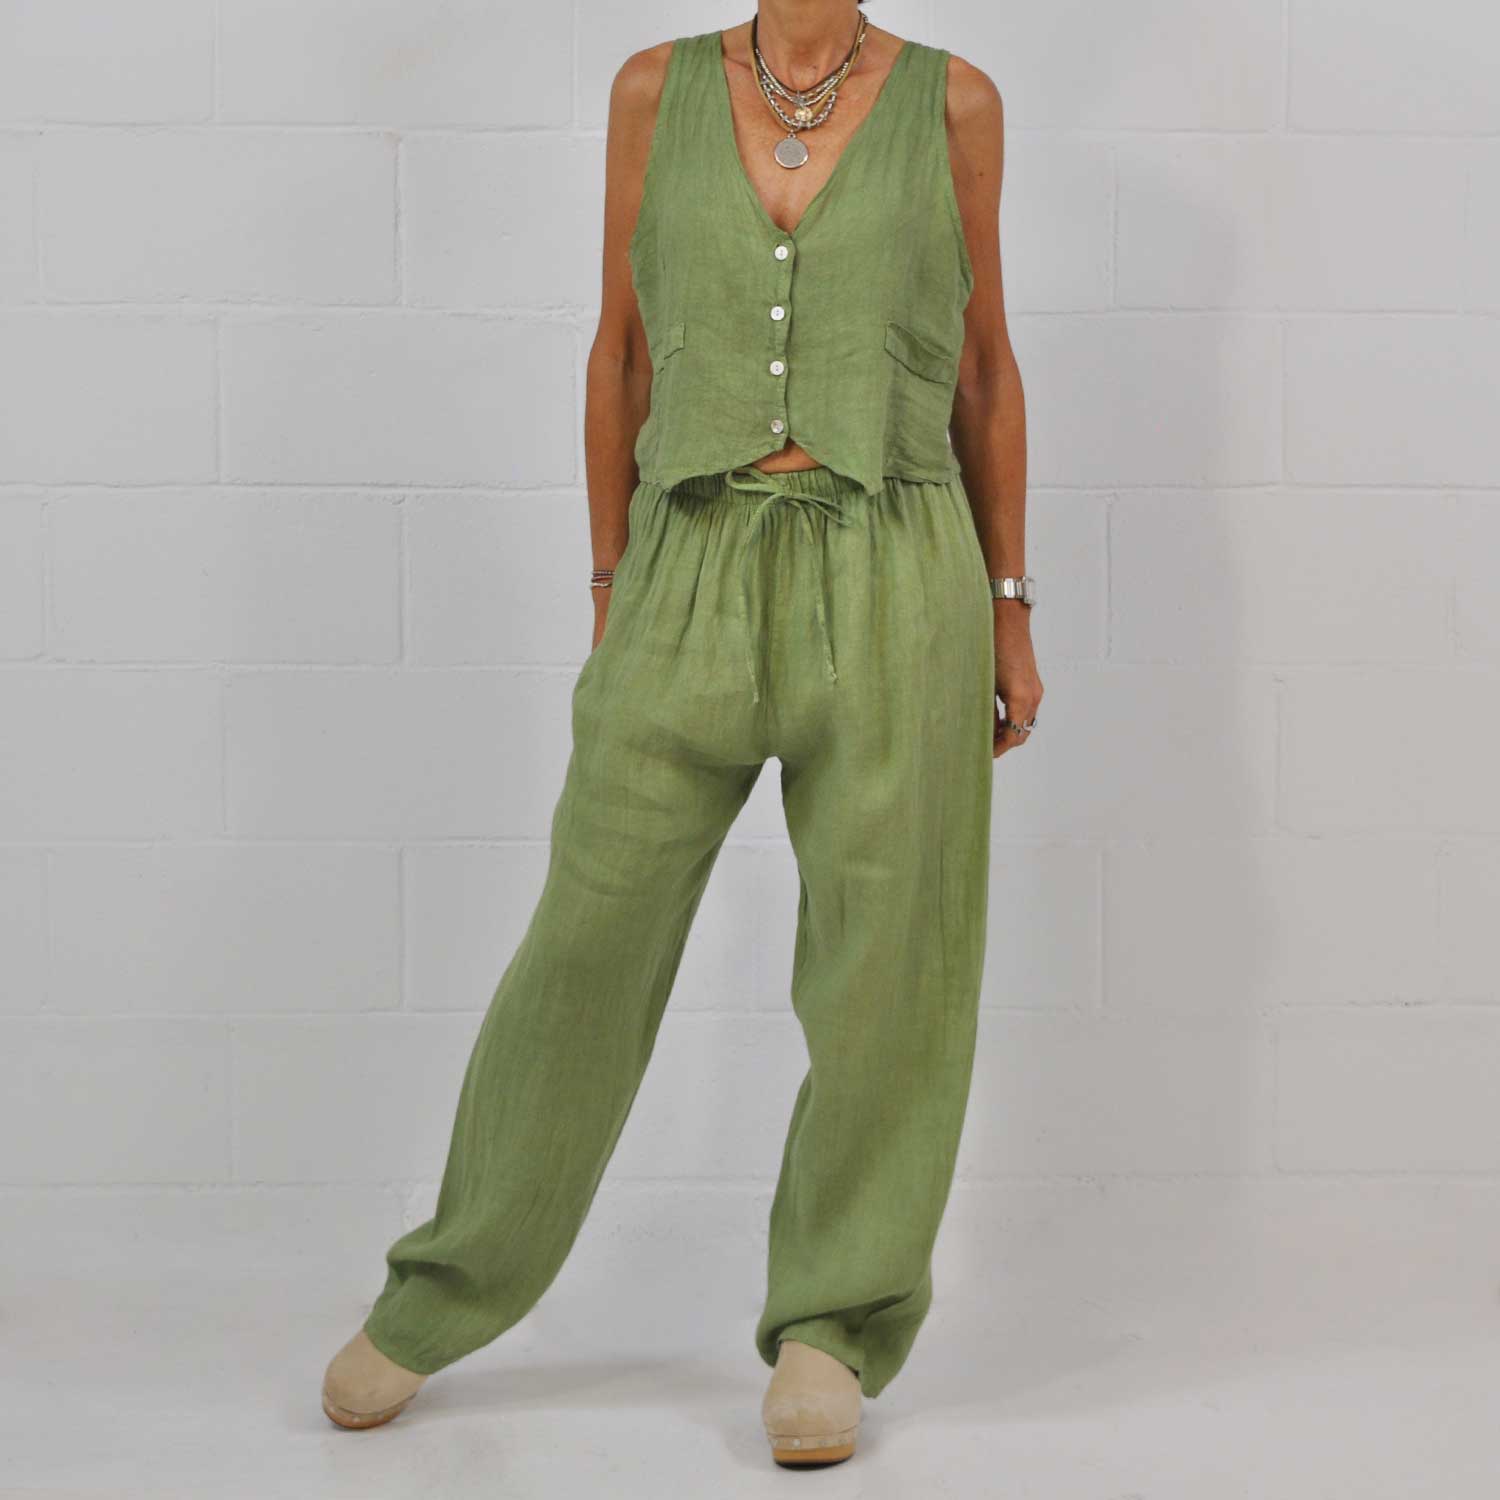 Green wide linen pants